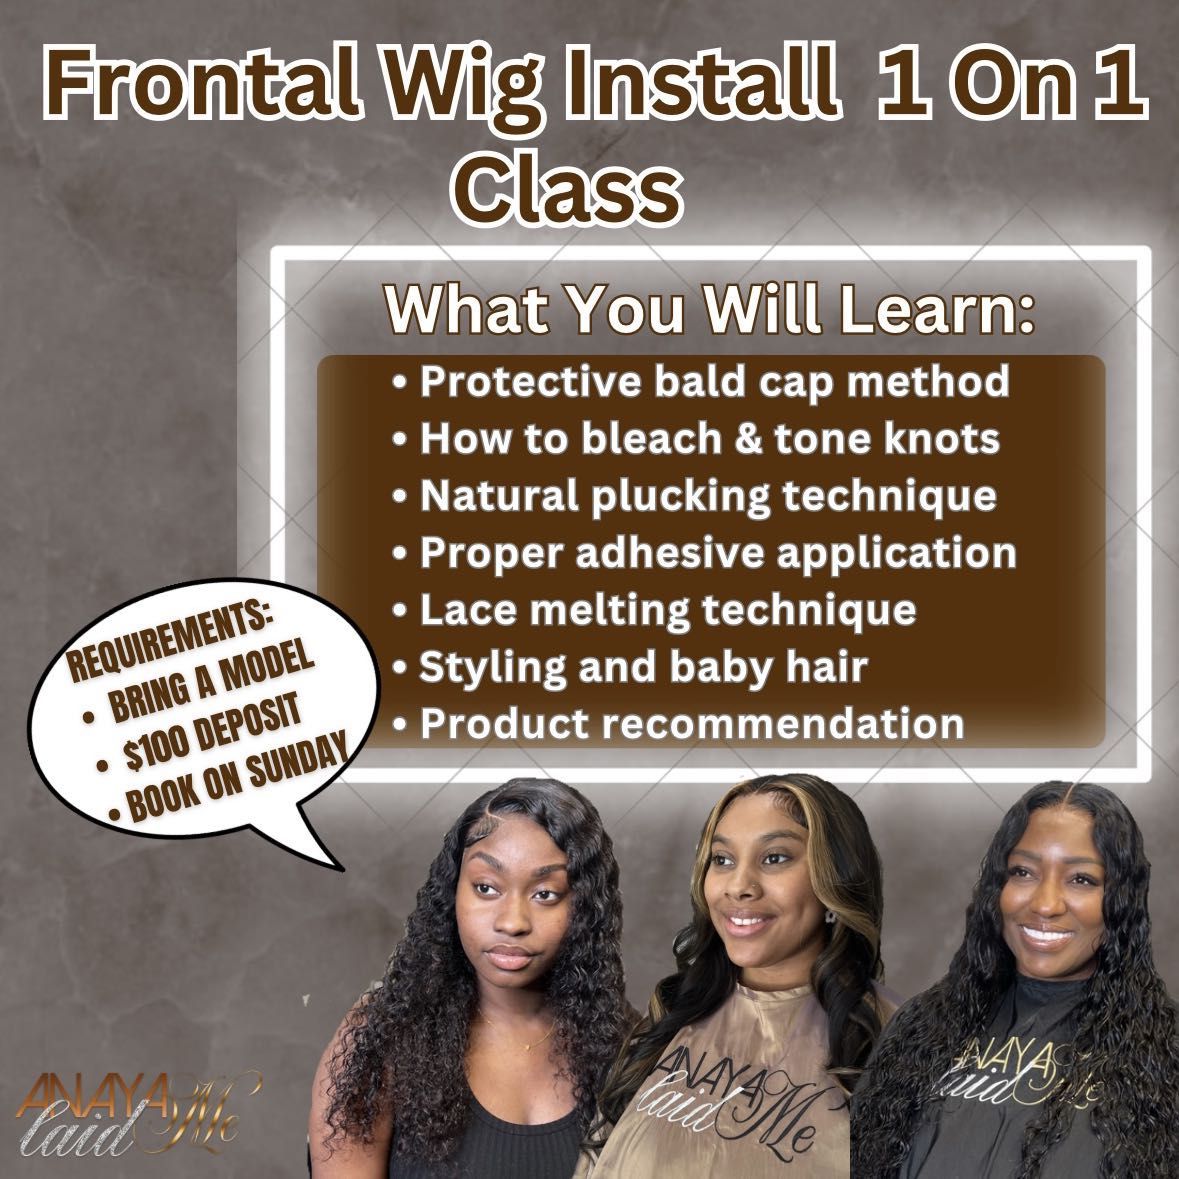 Frontal Wig Install 1 On 1 portfolio